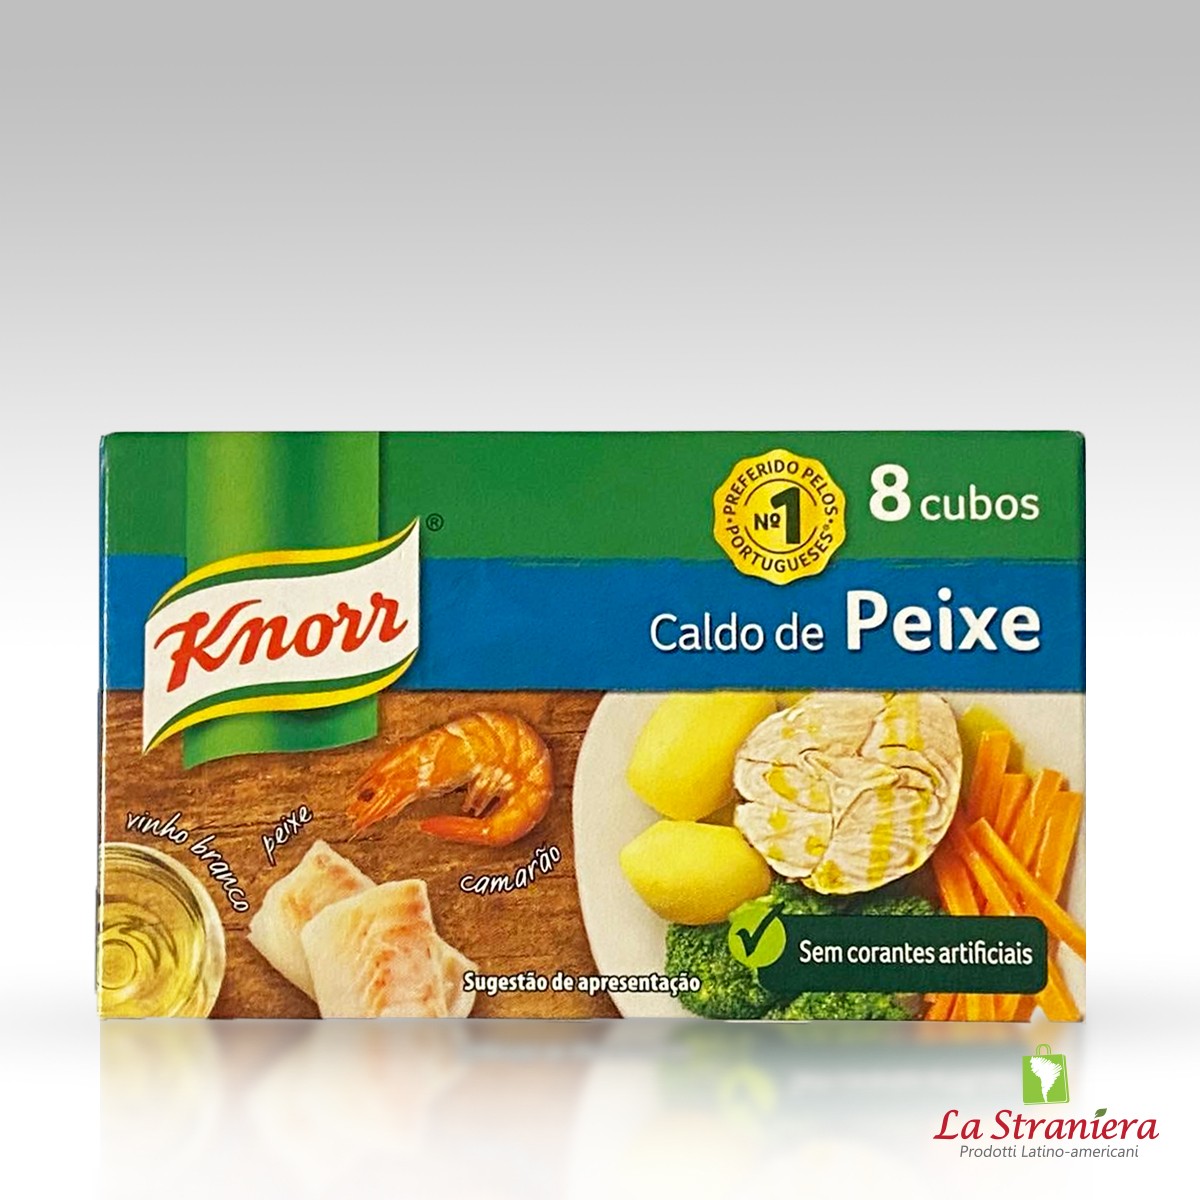 Dado di Pesce, Caldo de Peixe, Knorr 8u. - La Straniera Torino - Specialità  Sudamericane